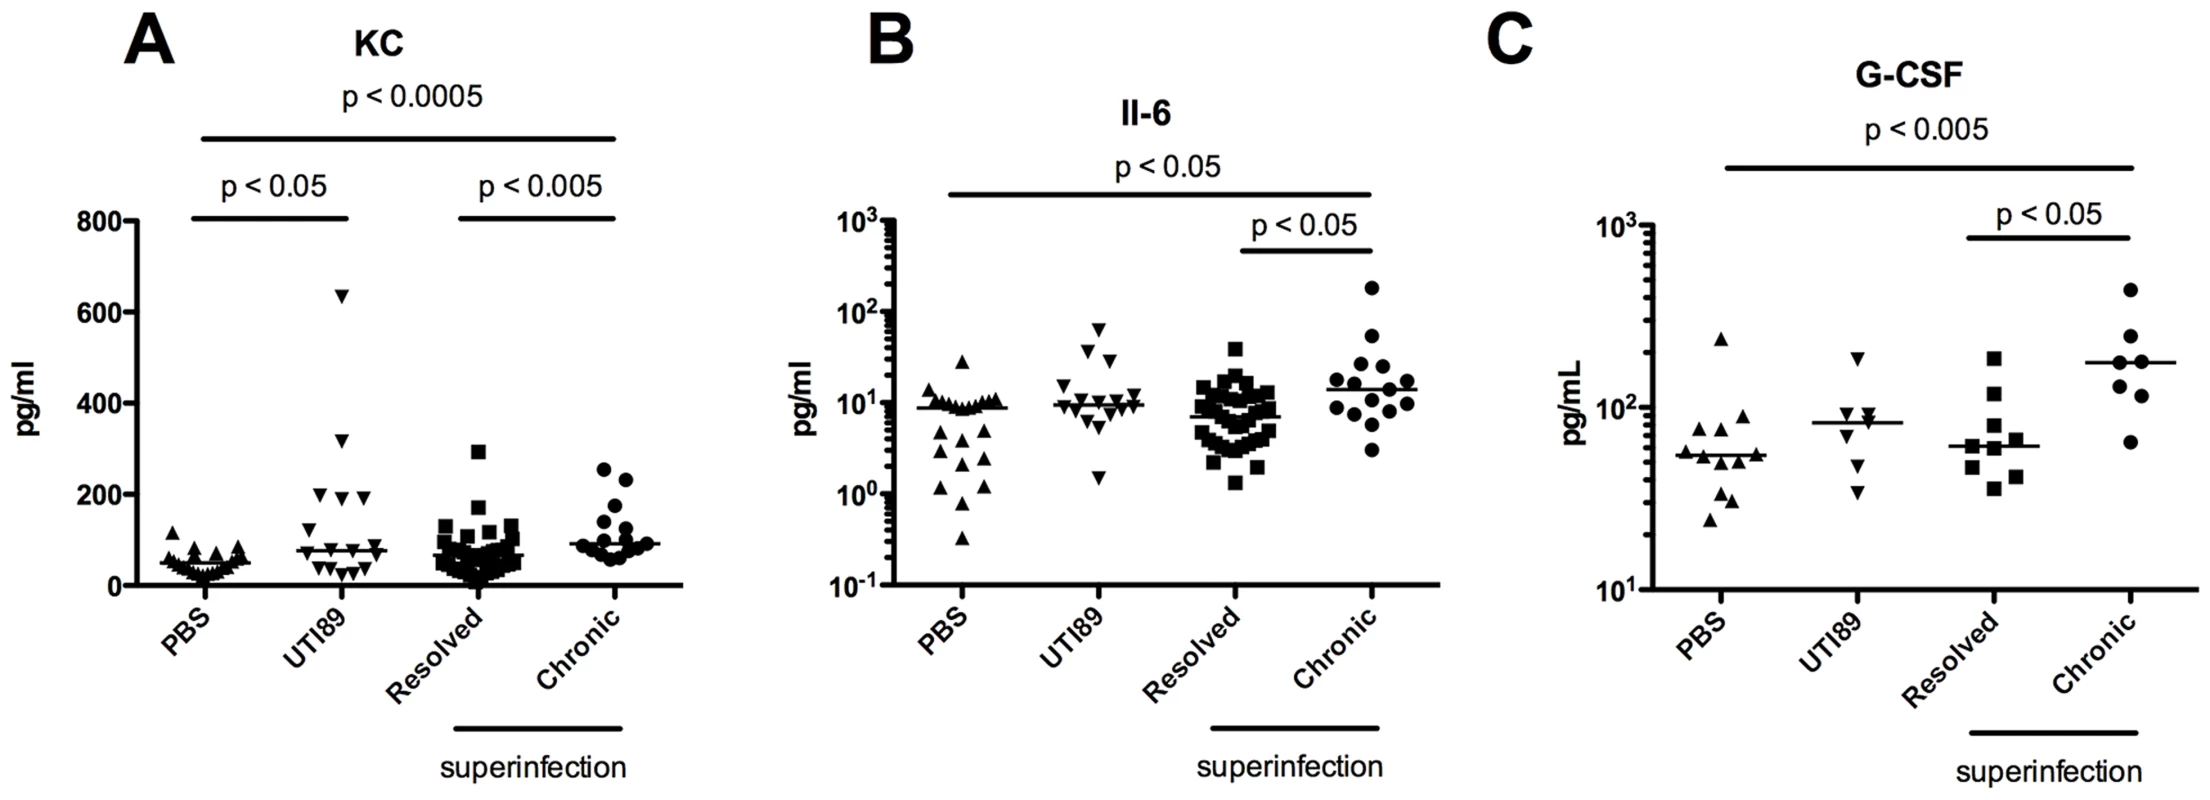 Serum cytokine signature of C57BL/6J mice with persistent bacteriuria.